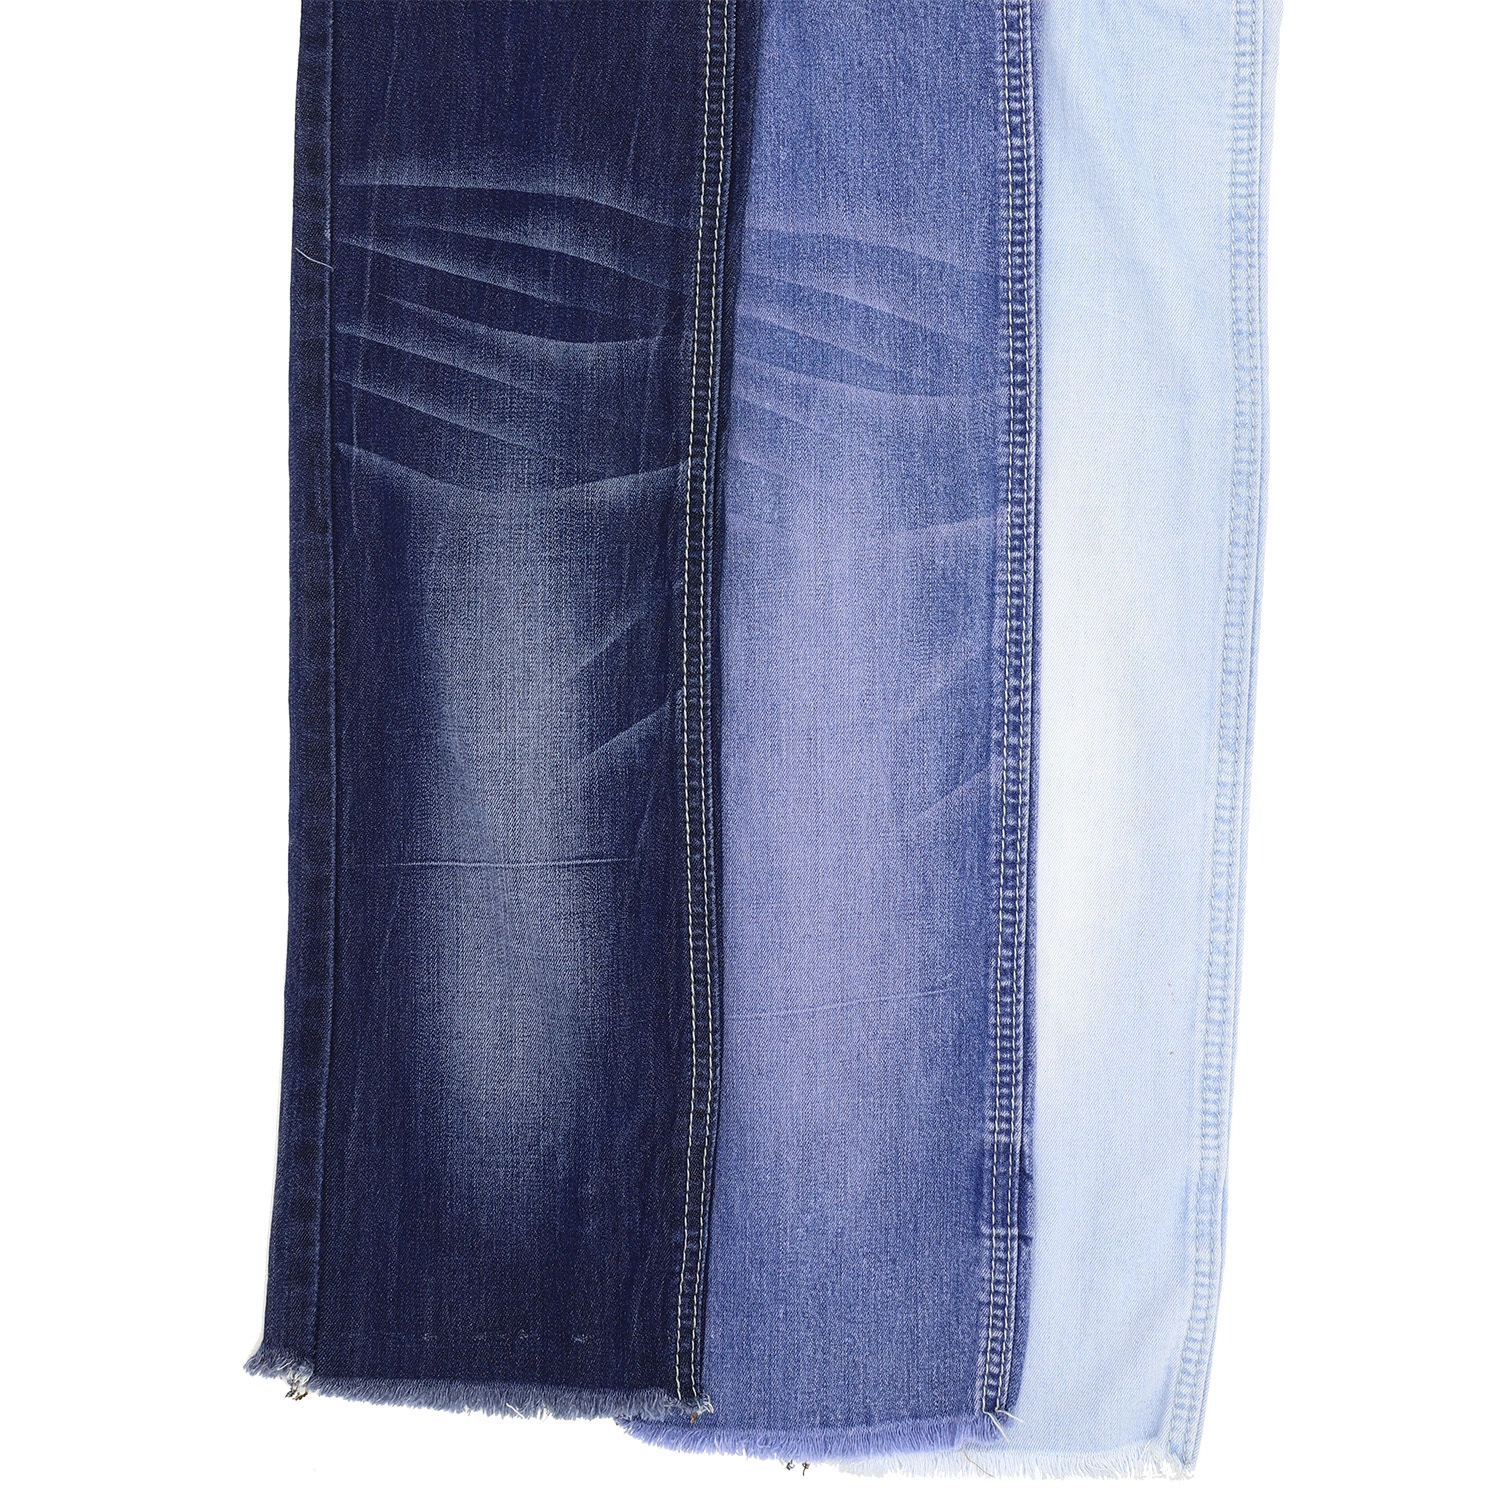 231A-3  Tencel stretch denim fabric with 68%Tencel   29%Poly  2%Viscose  1%Spandex 2